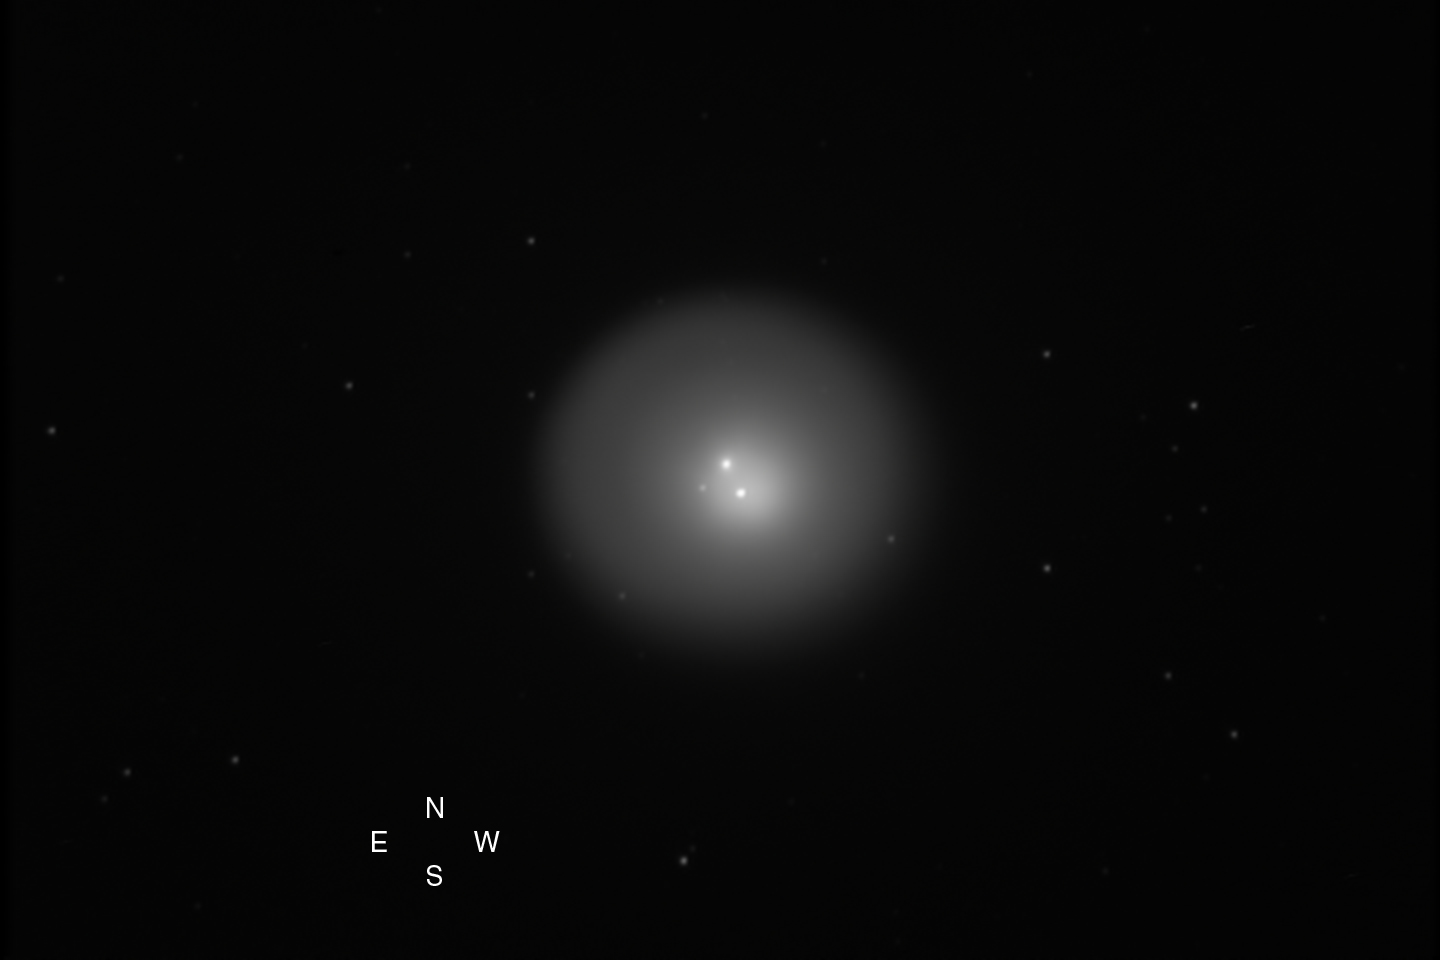 Image of Comet 17/P Holmes